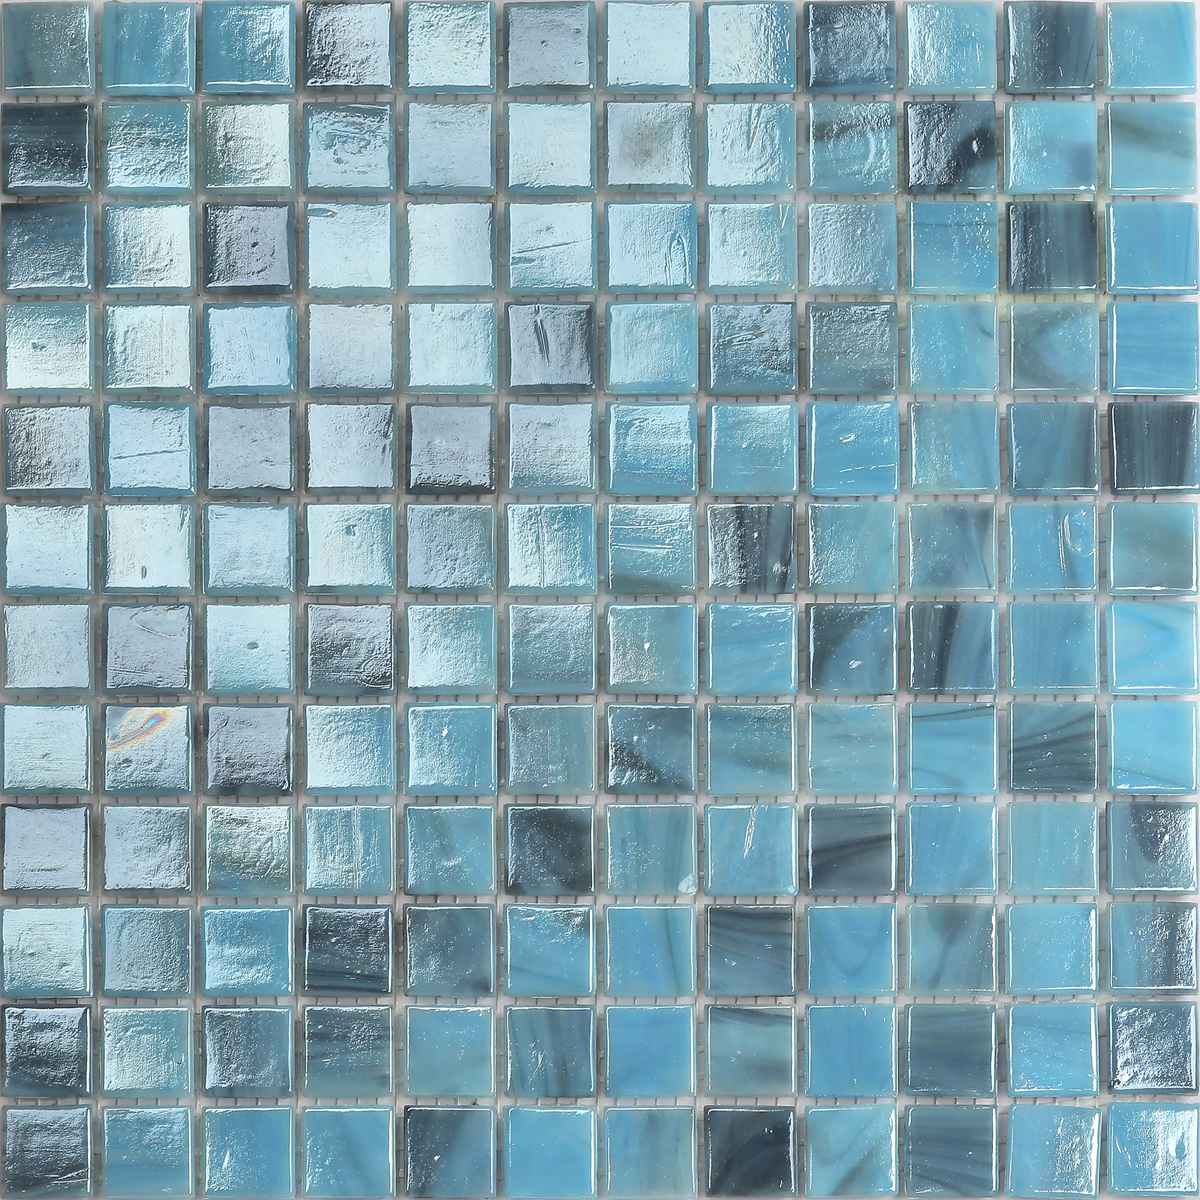 Bathroom and pool mosaic floor tiles